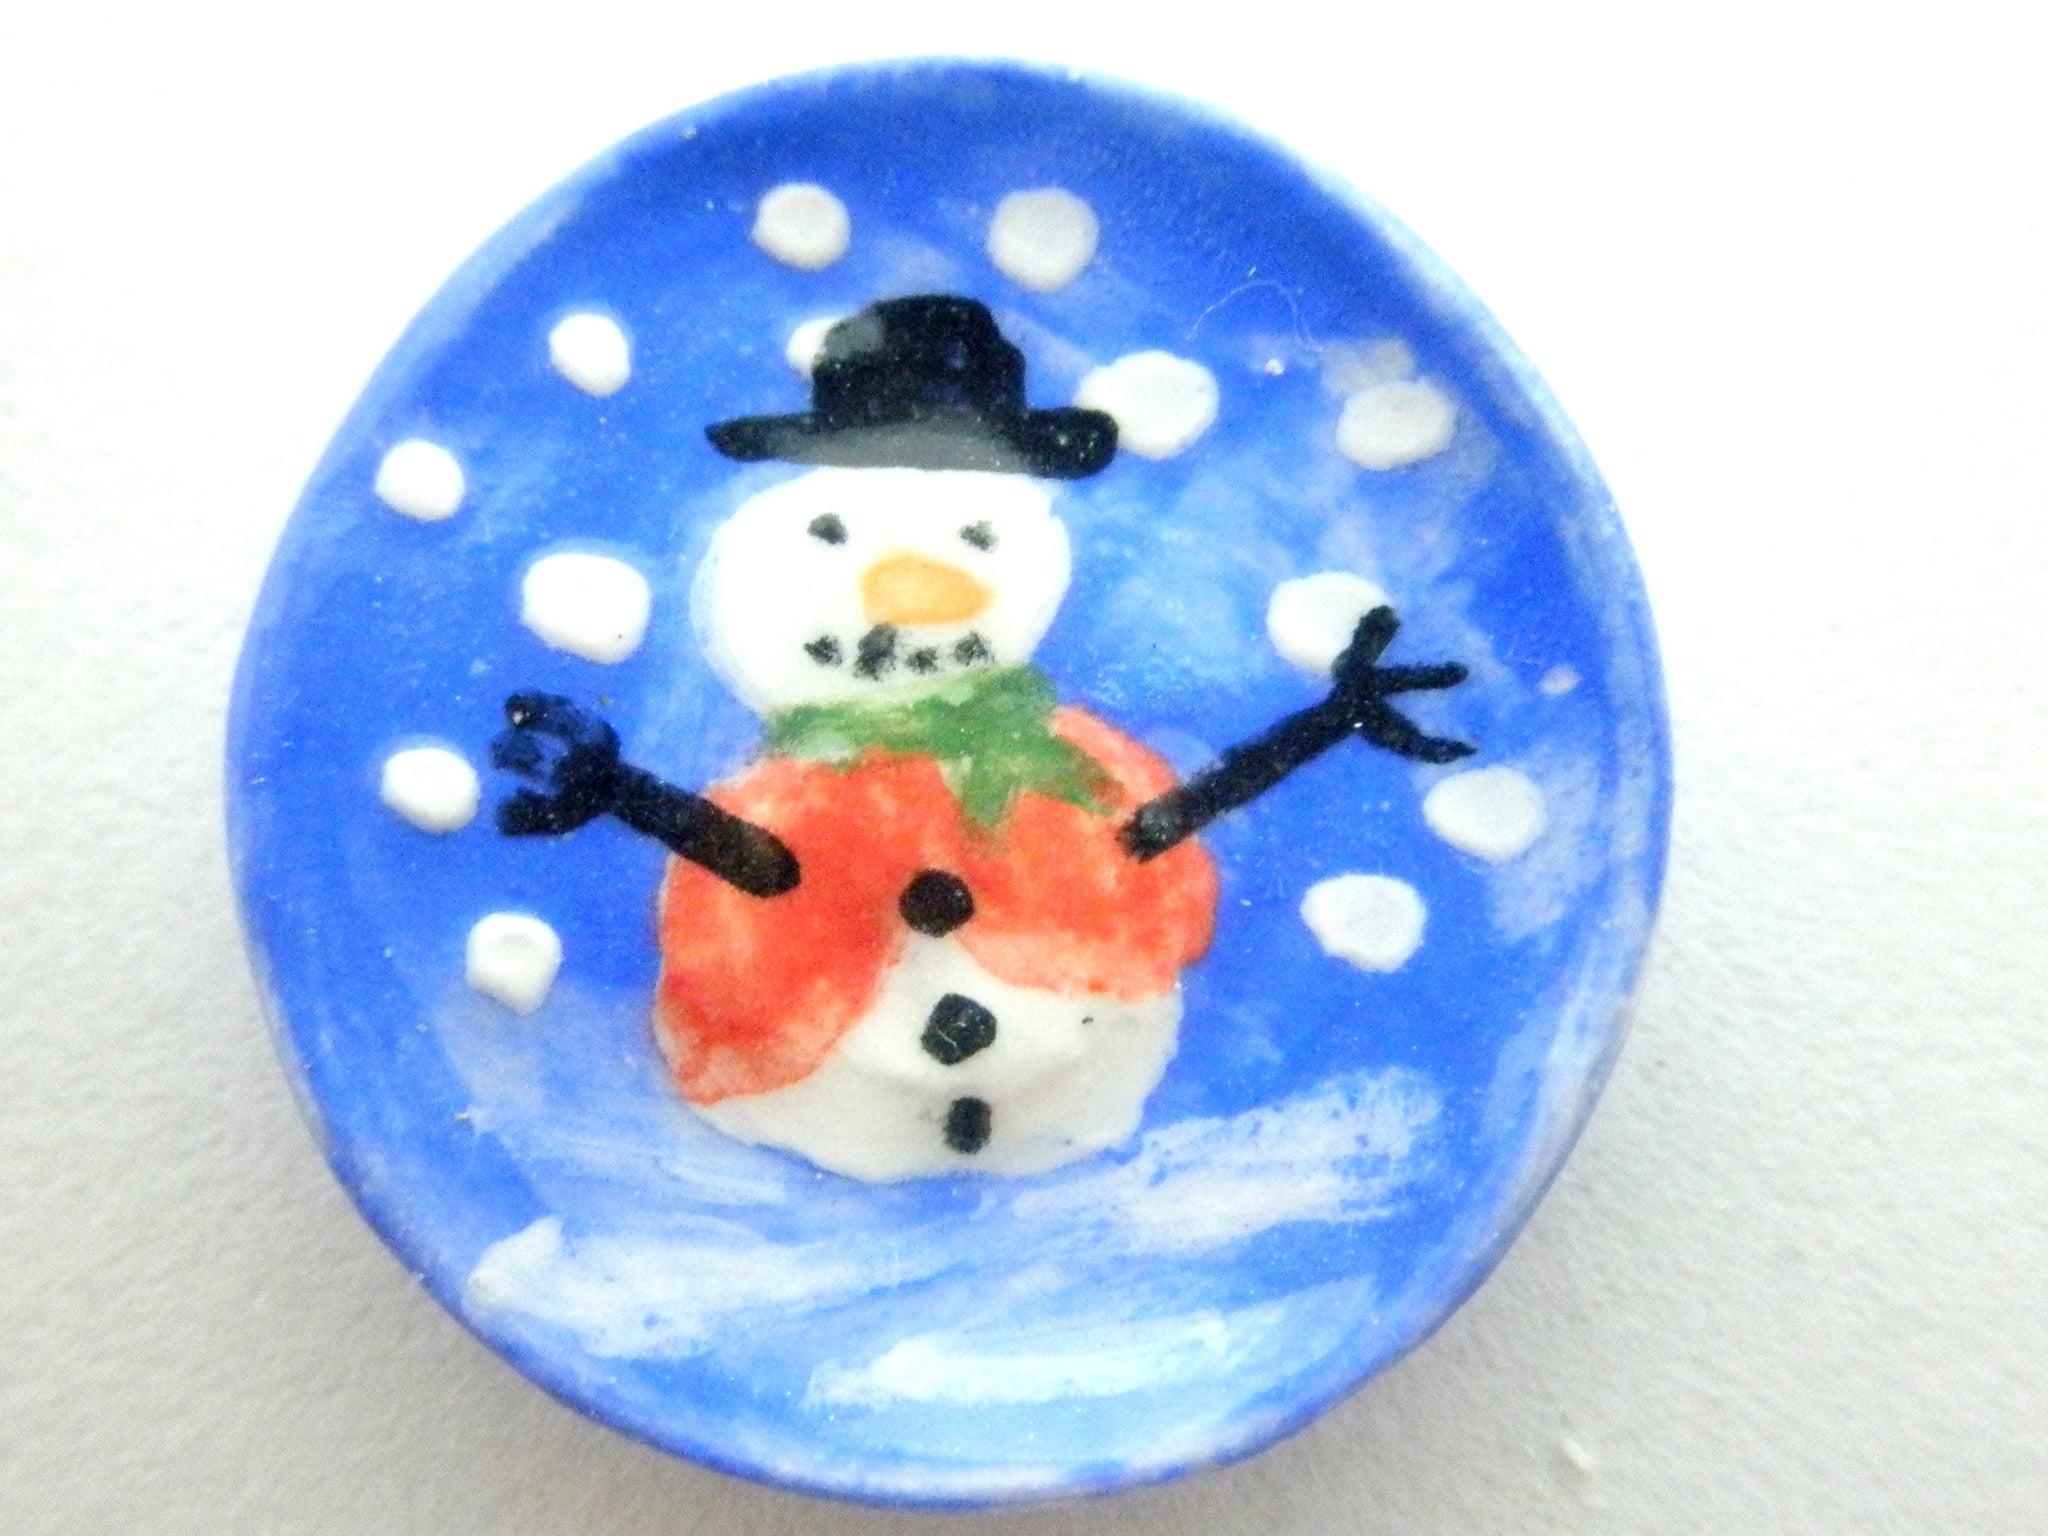 Miniature Christmas plate - Snowman on blue background